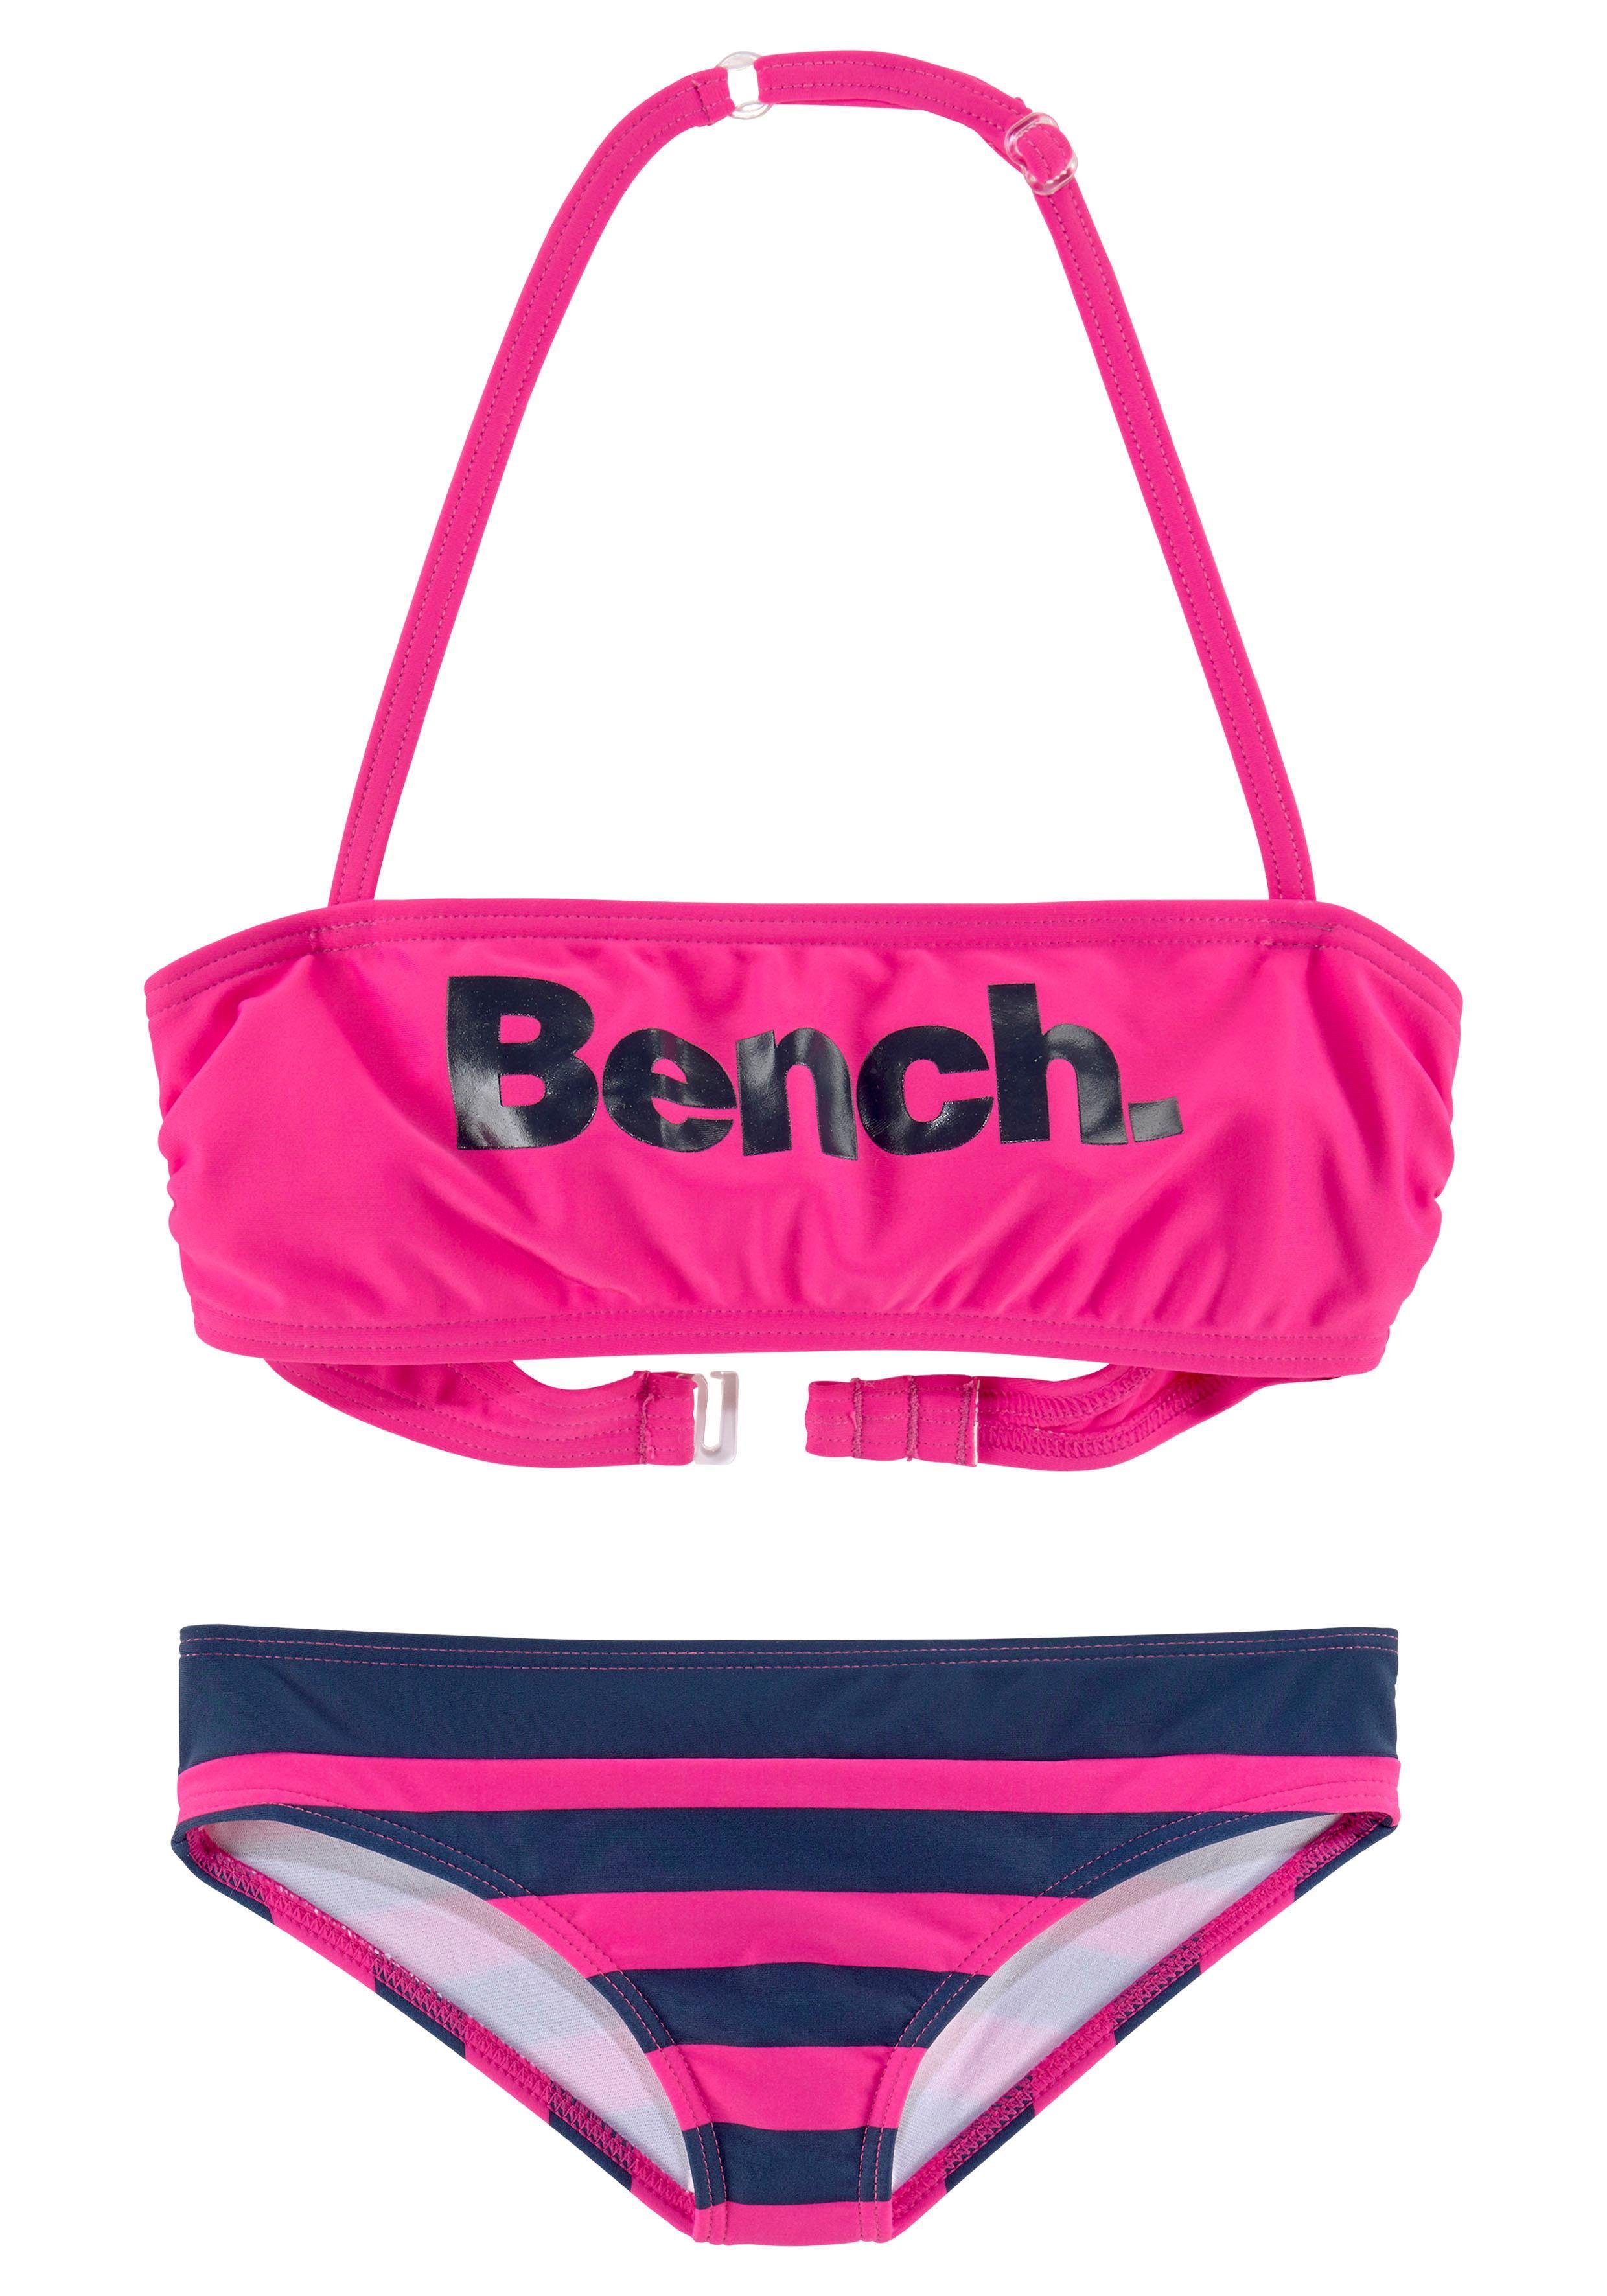 Bench. Bandeau-Bikini mit pink-marine großem Logoprint